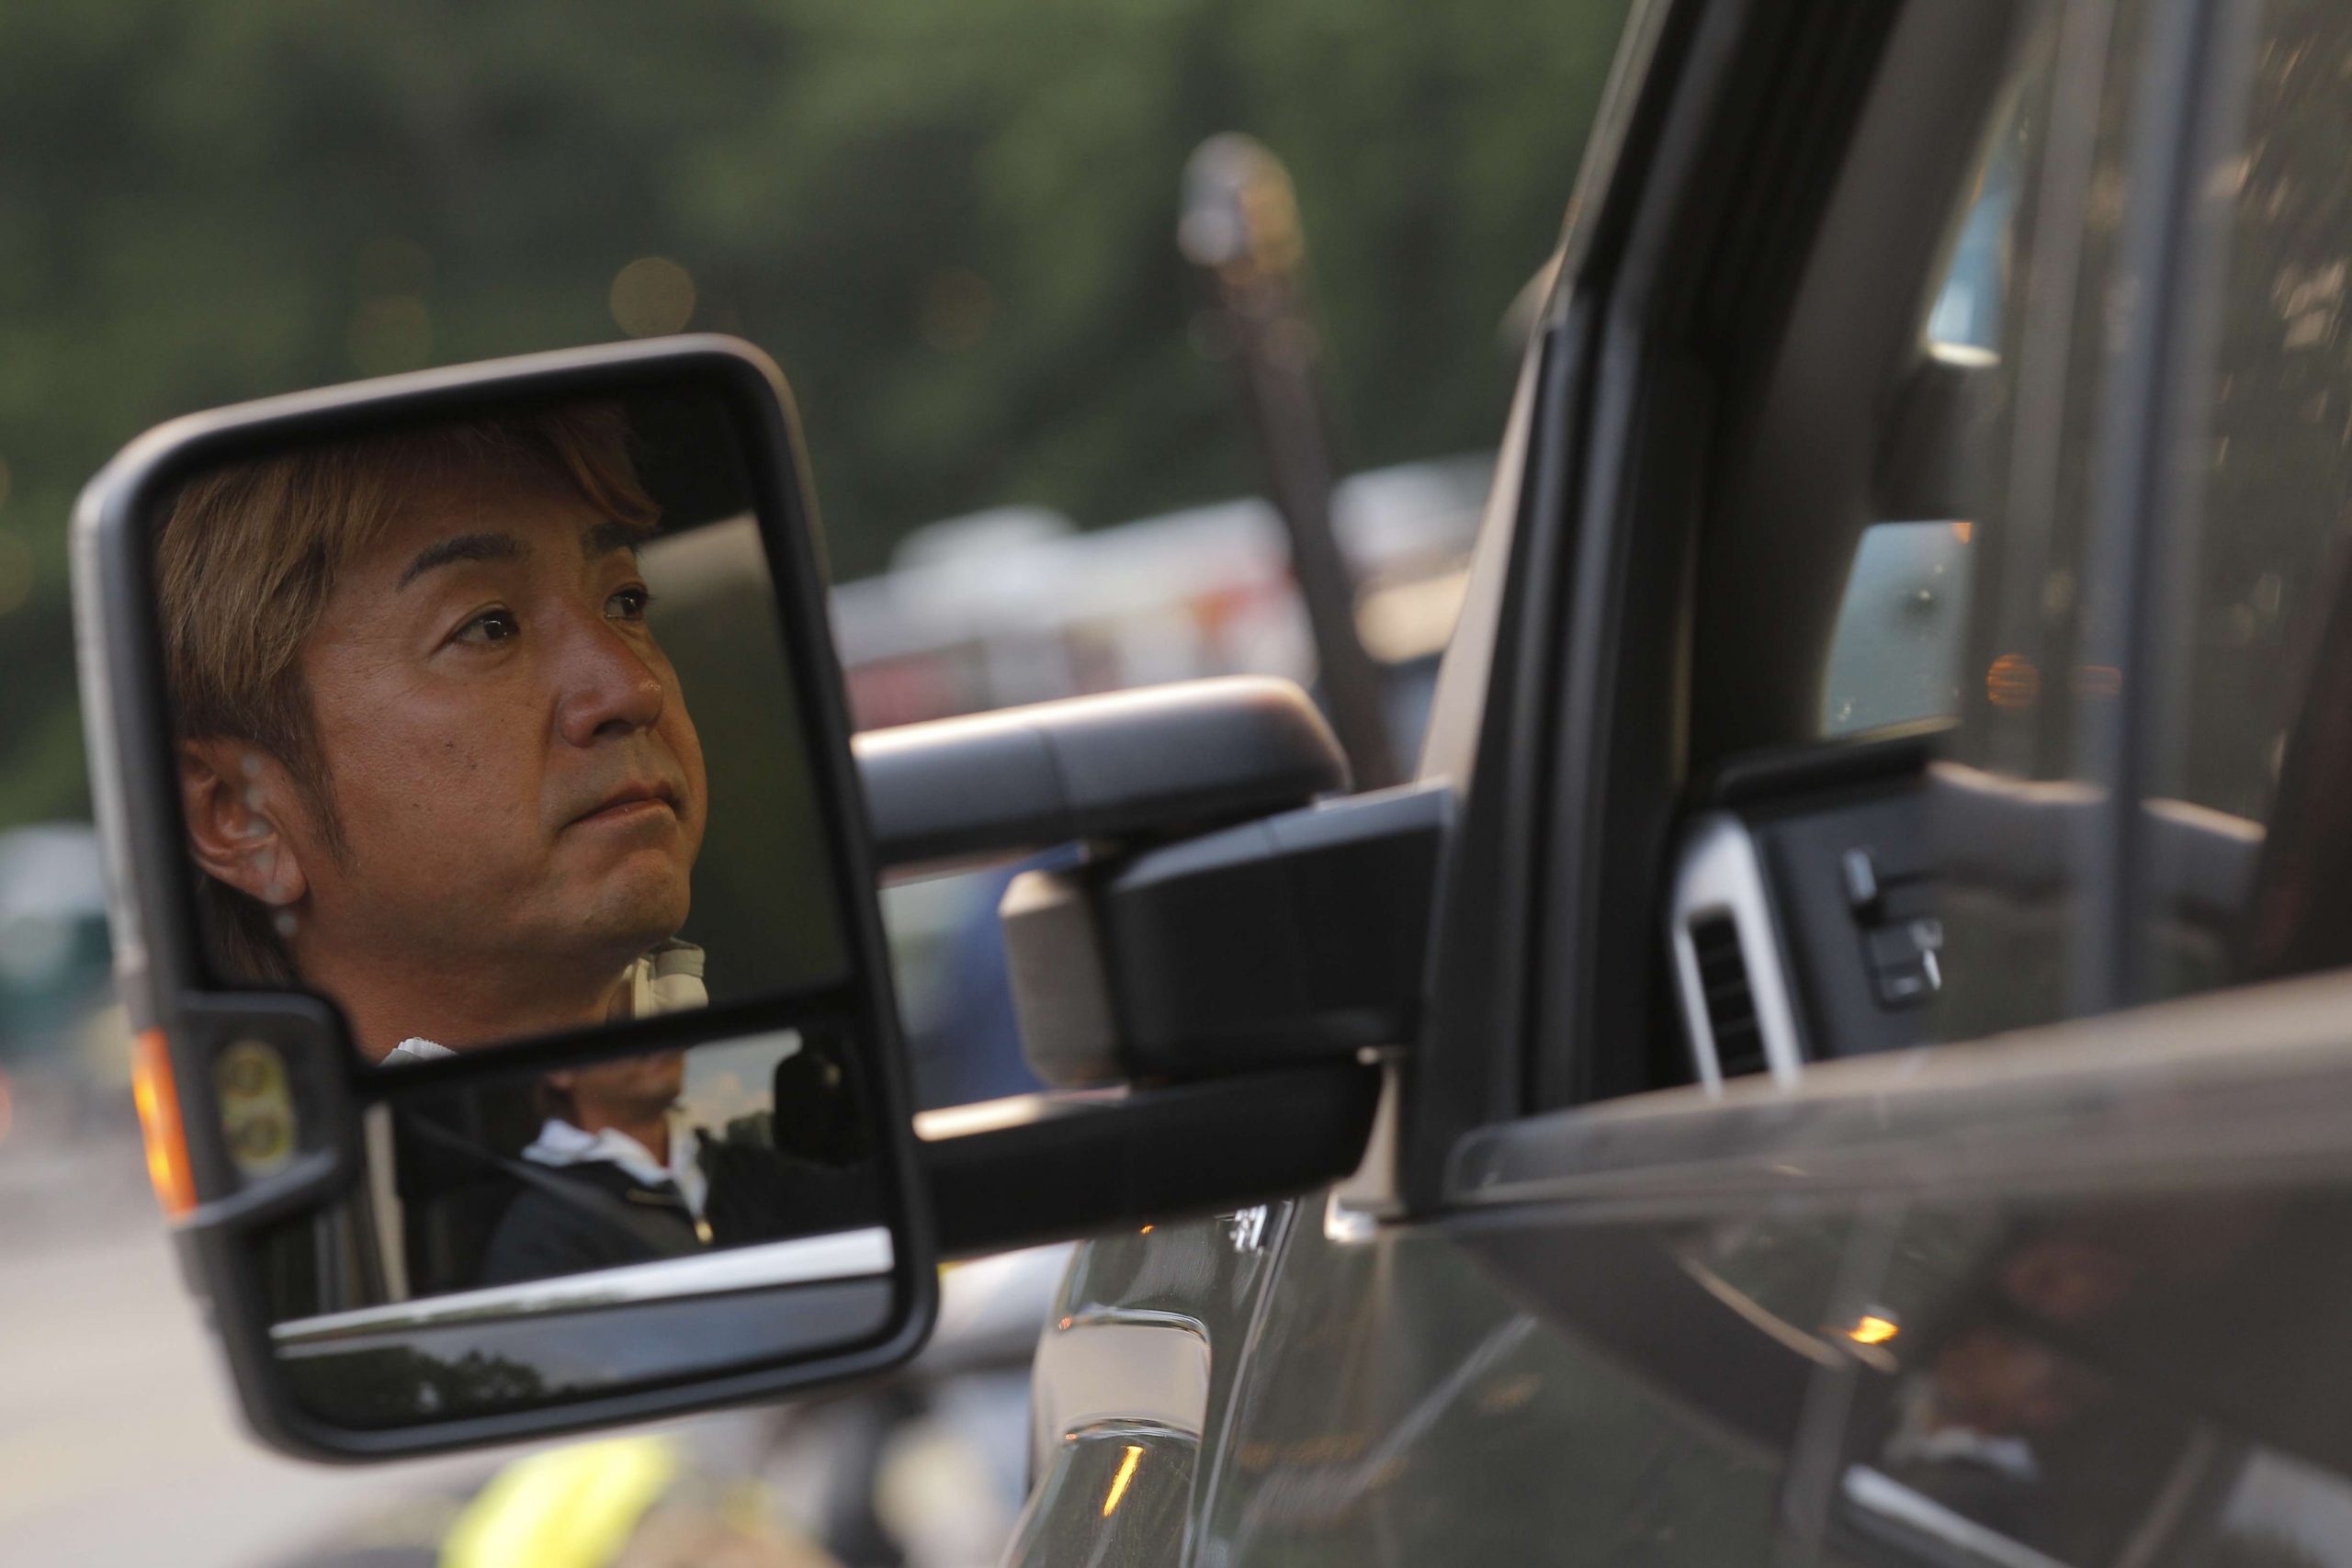 Morizo Shimizu is in the driver's seat.